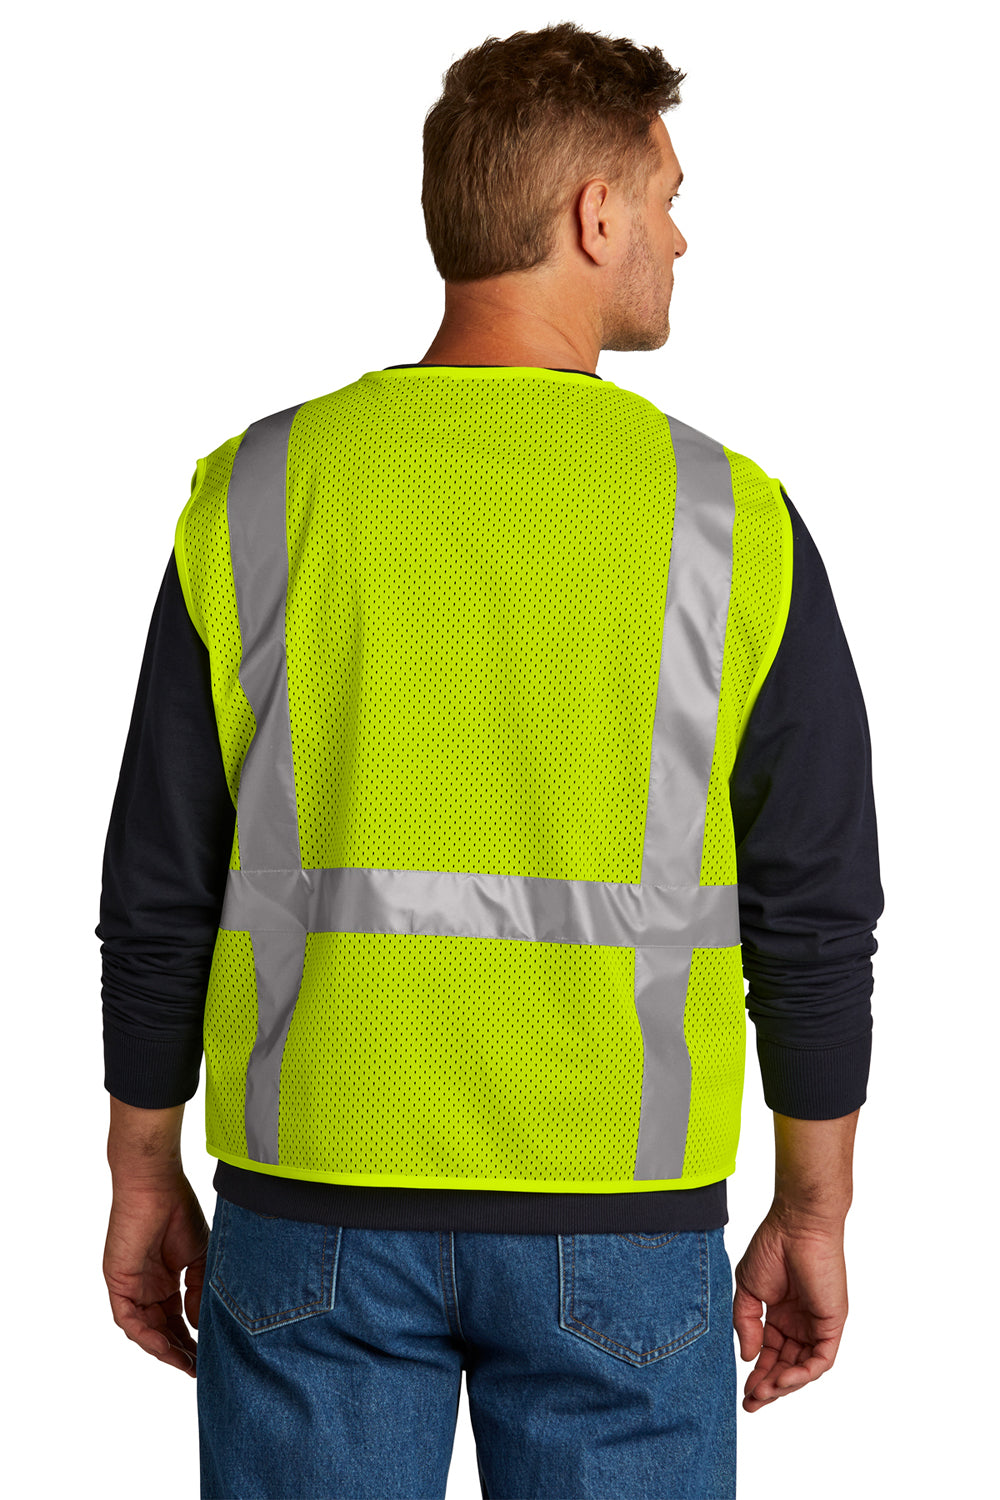 CornerStone CSV104 Mens ANSI 107 Class 2 Mesh Zipper Vest w/ Pocket Safety Yellow Back